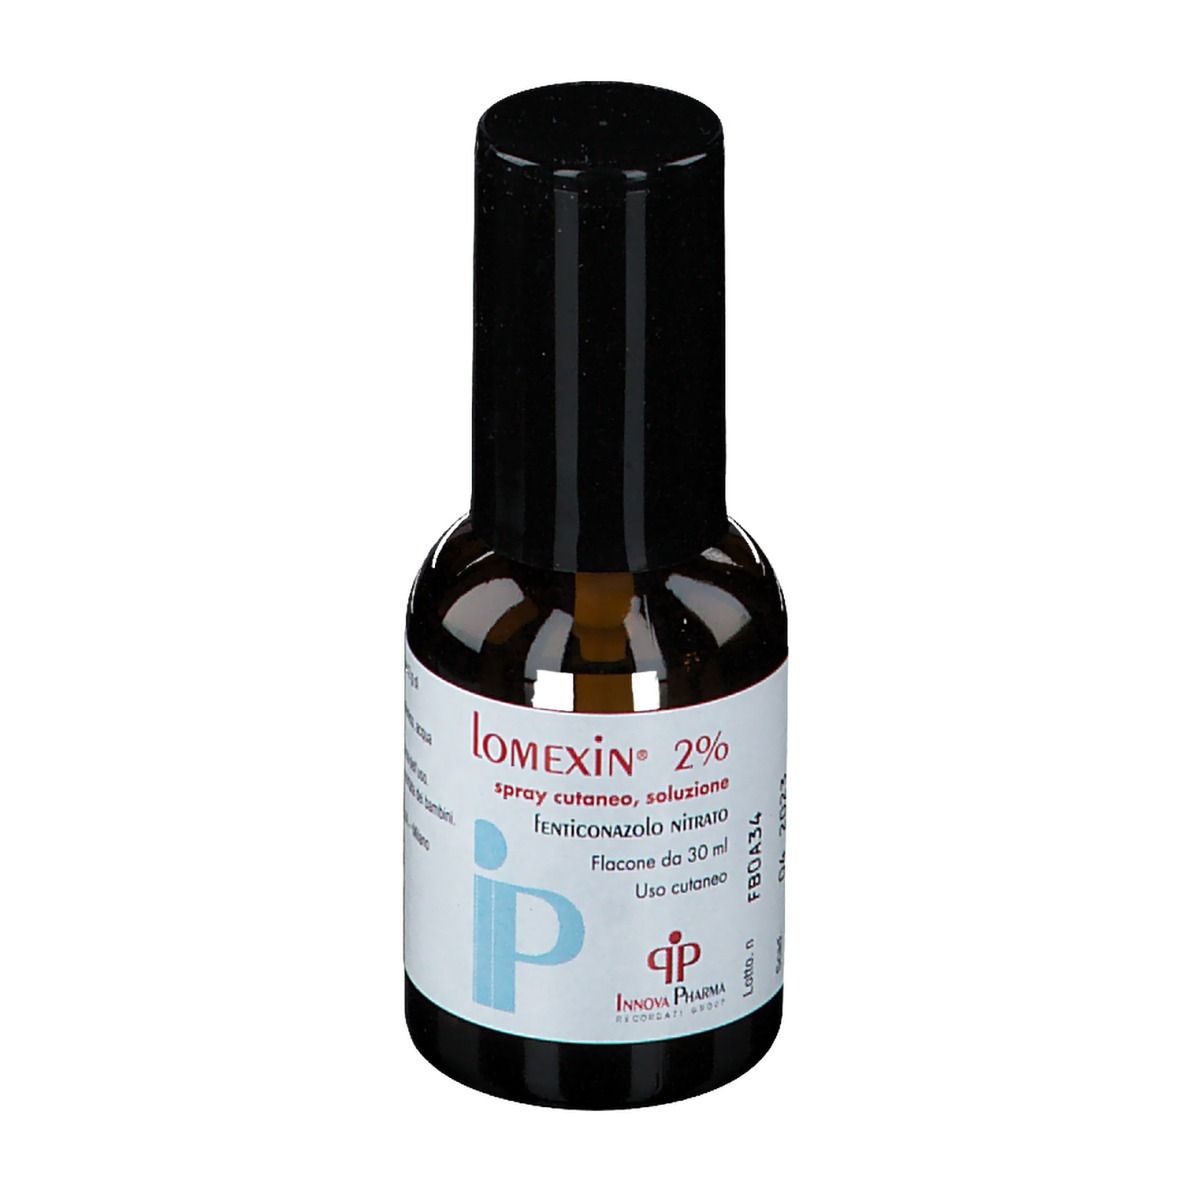 Lomexin 2% spray cutaneo, soluzione